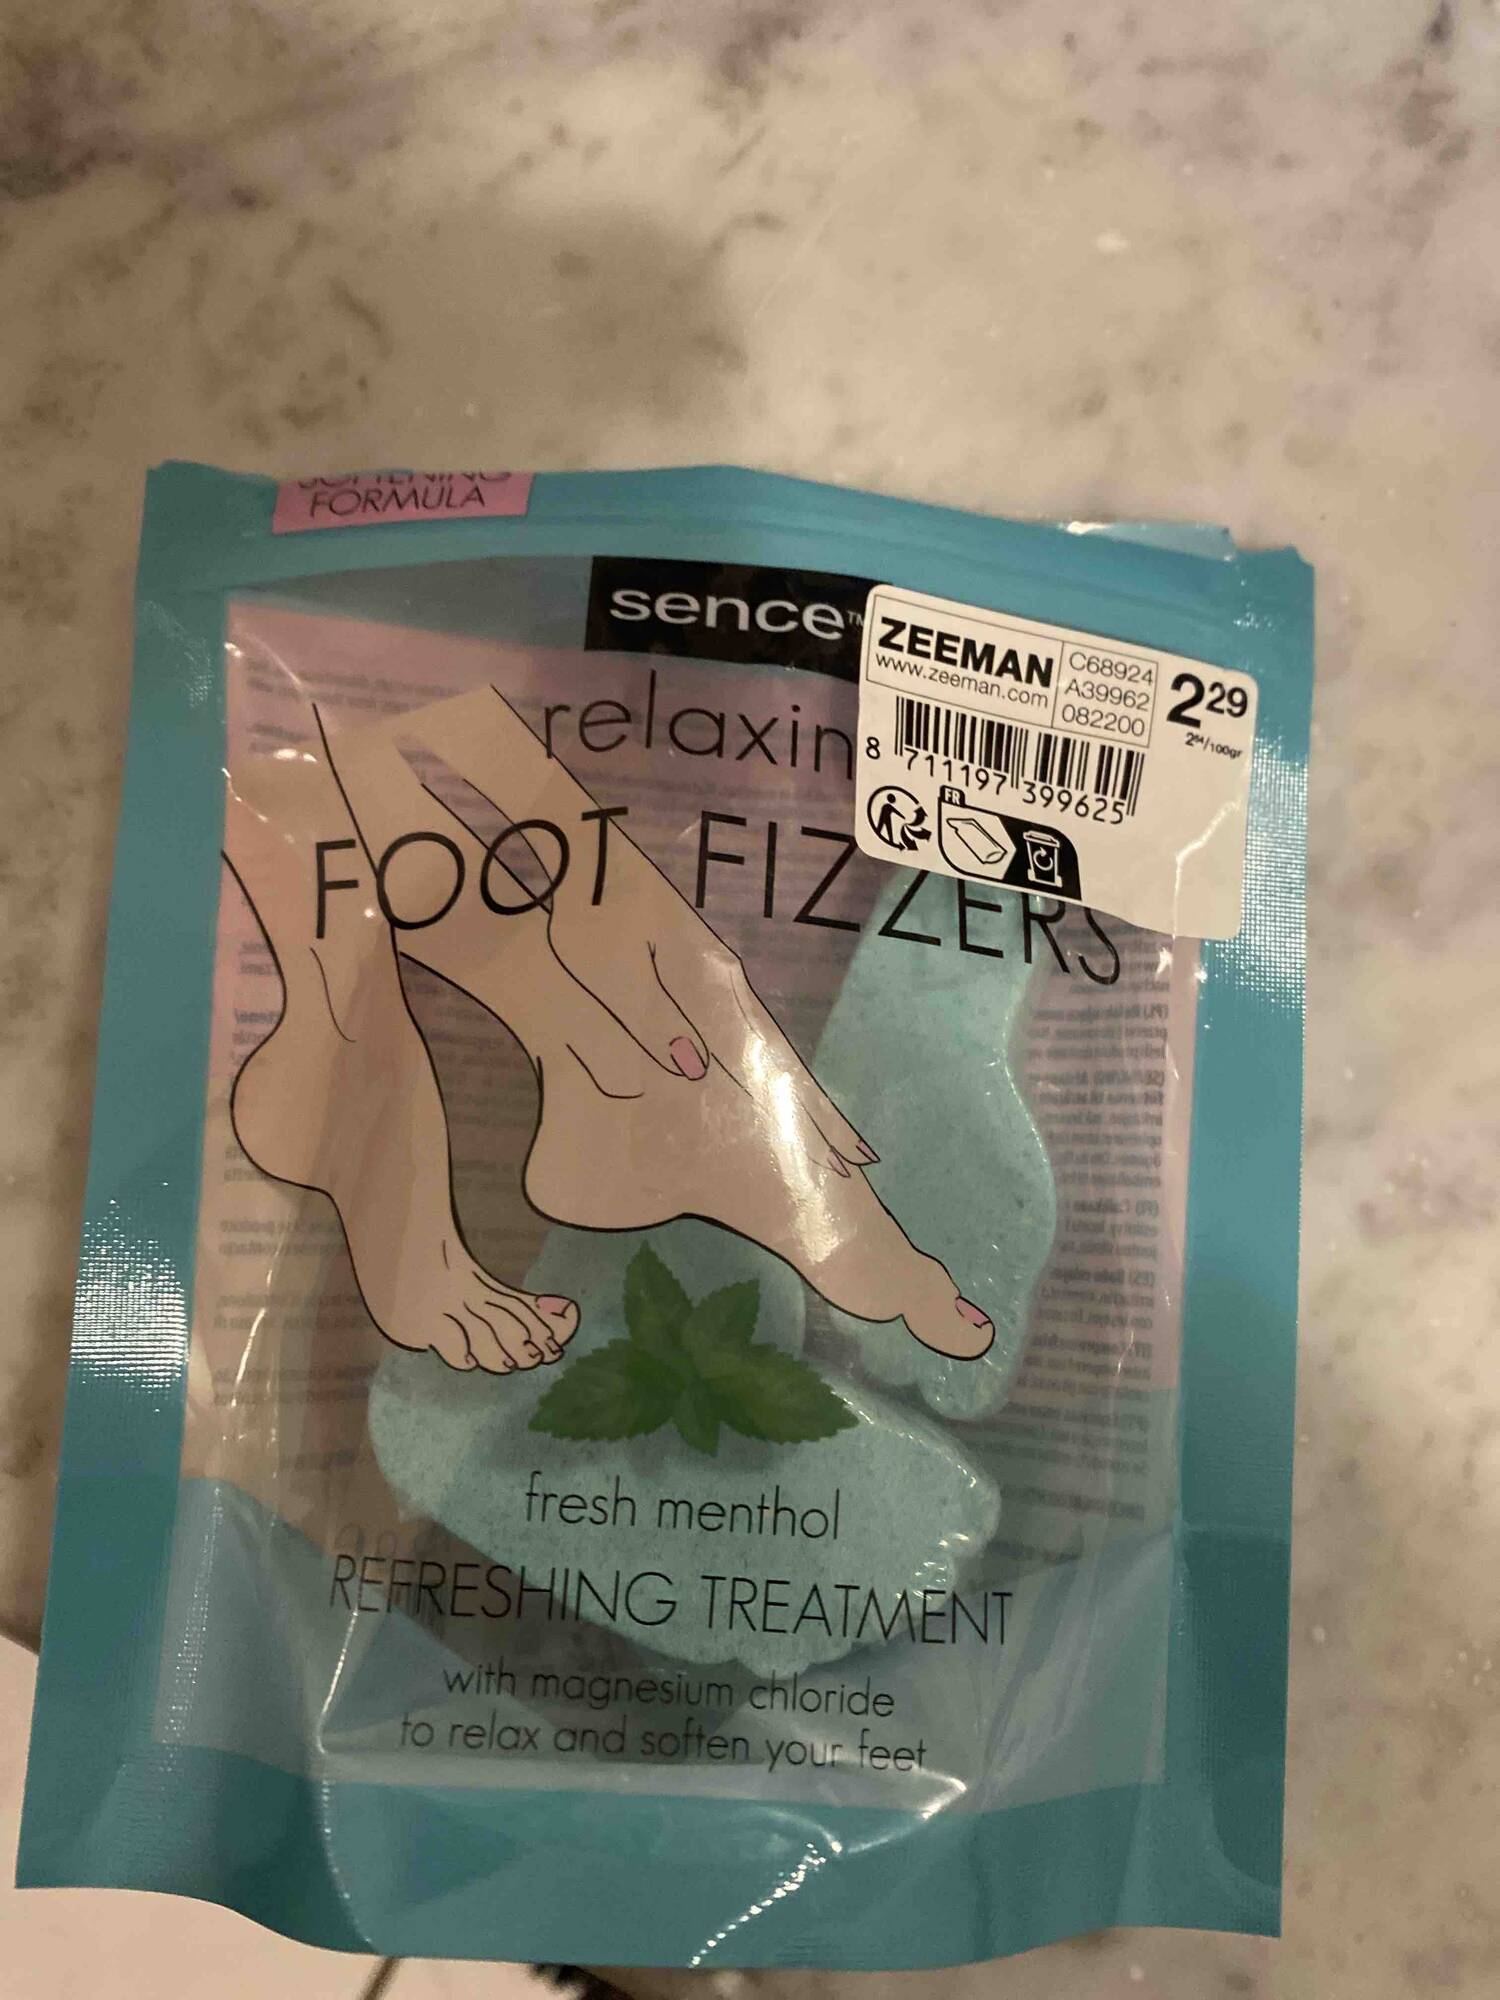 SENCE - Fresh menthol - Relaxing foot fizzers